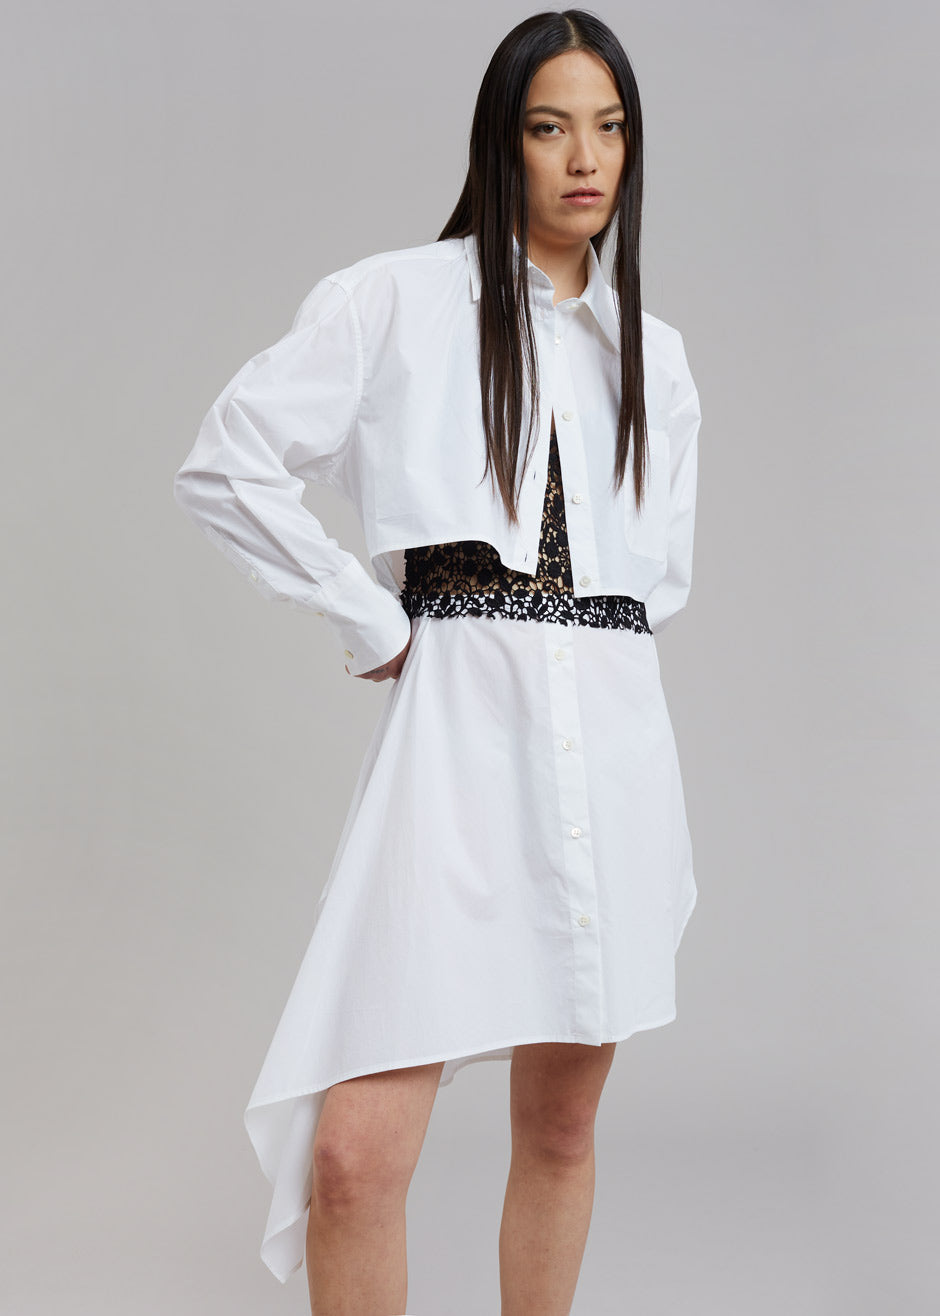 JW Anderson Lace Insert Shirt Dress - White/Black